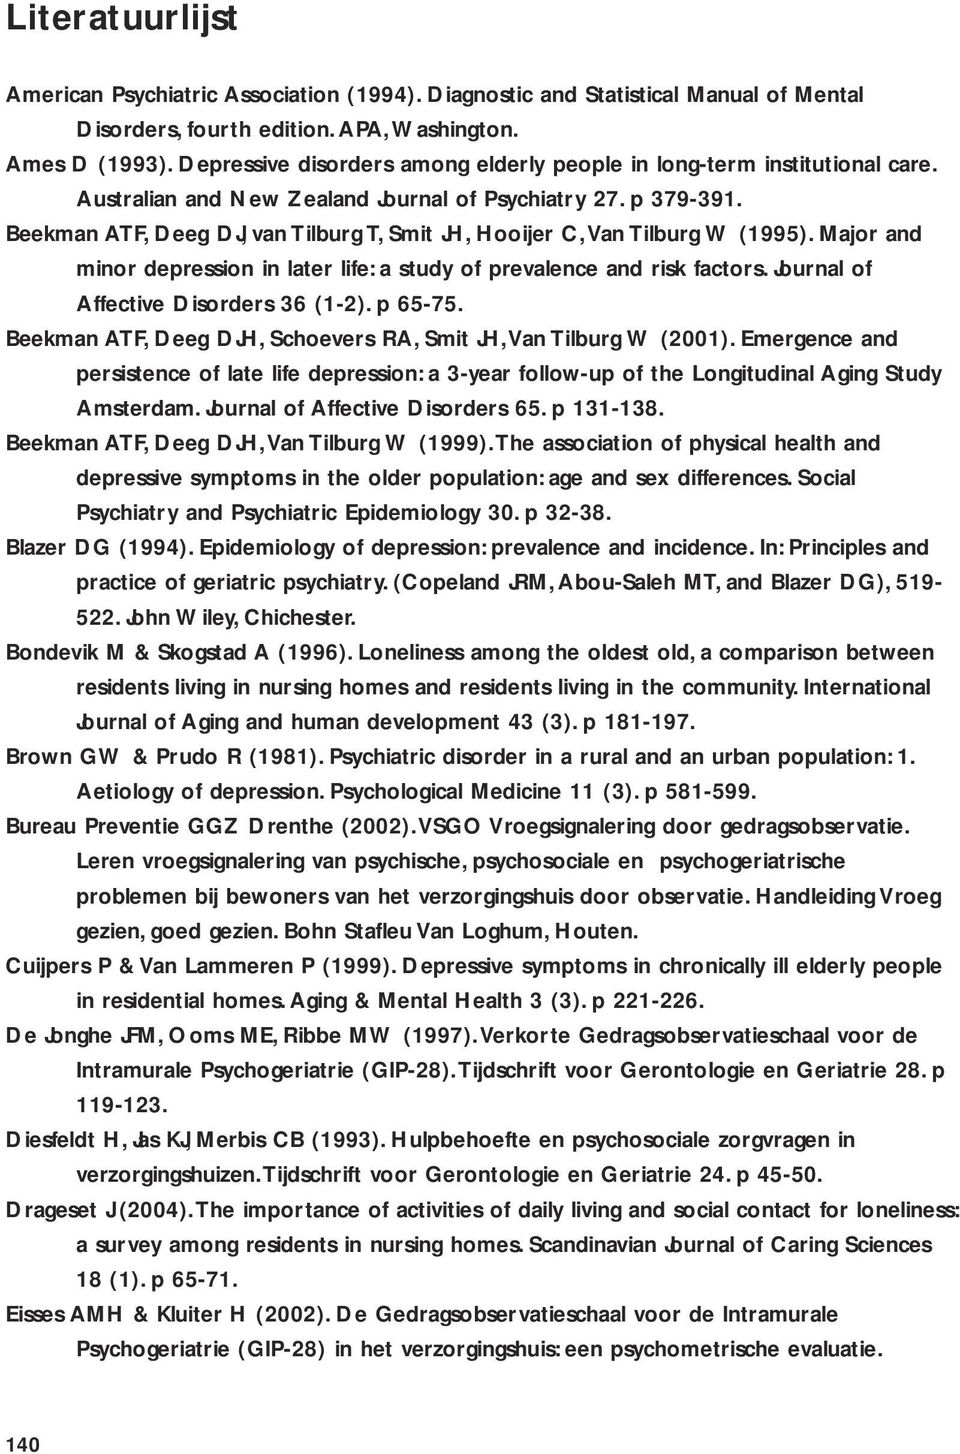 Beekman ATF, Deeg DJ, van Tilburg T, Smit JH, Hooijer C,Van Tilburg W (1995). Major and minor depression in later life: a study of prevalence and risk factors. Journal of Affective Disorders 36 (1-2).